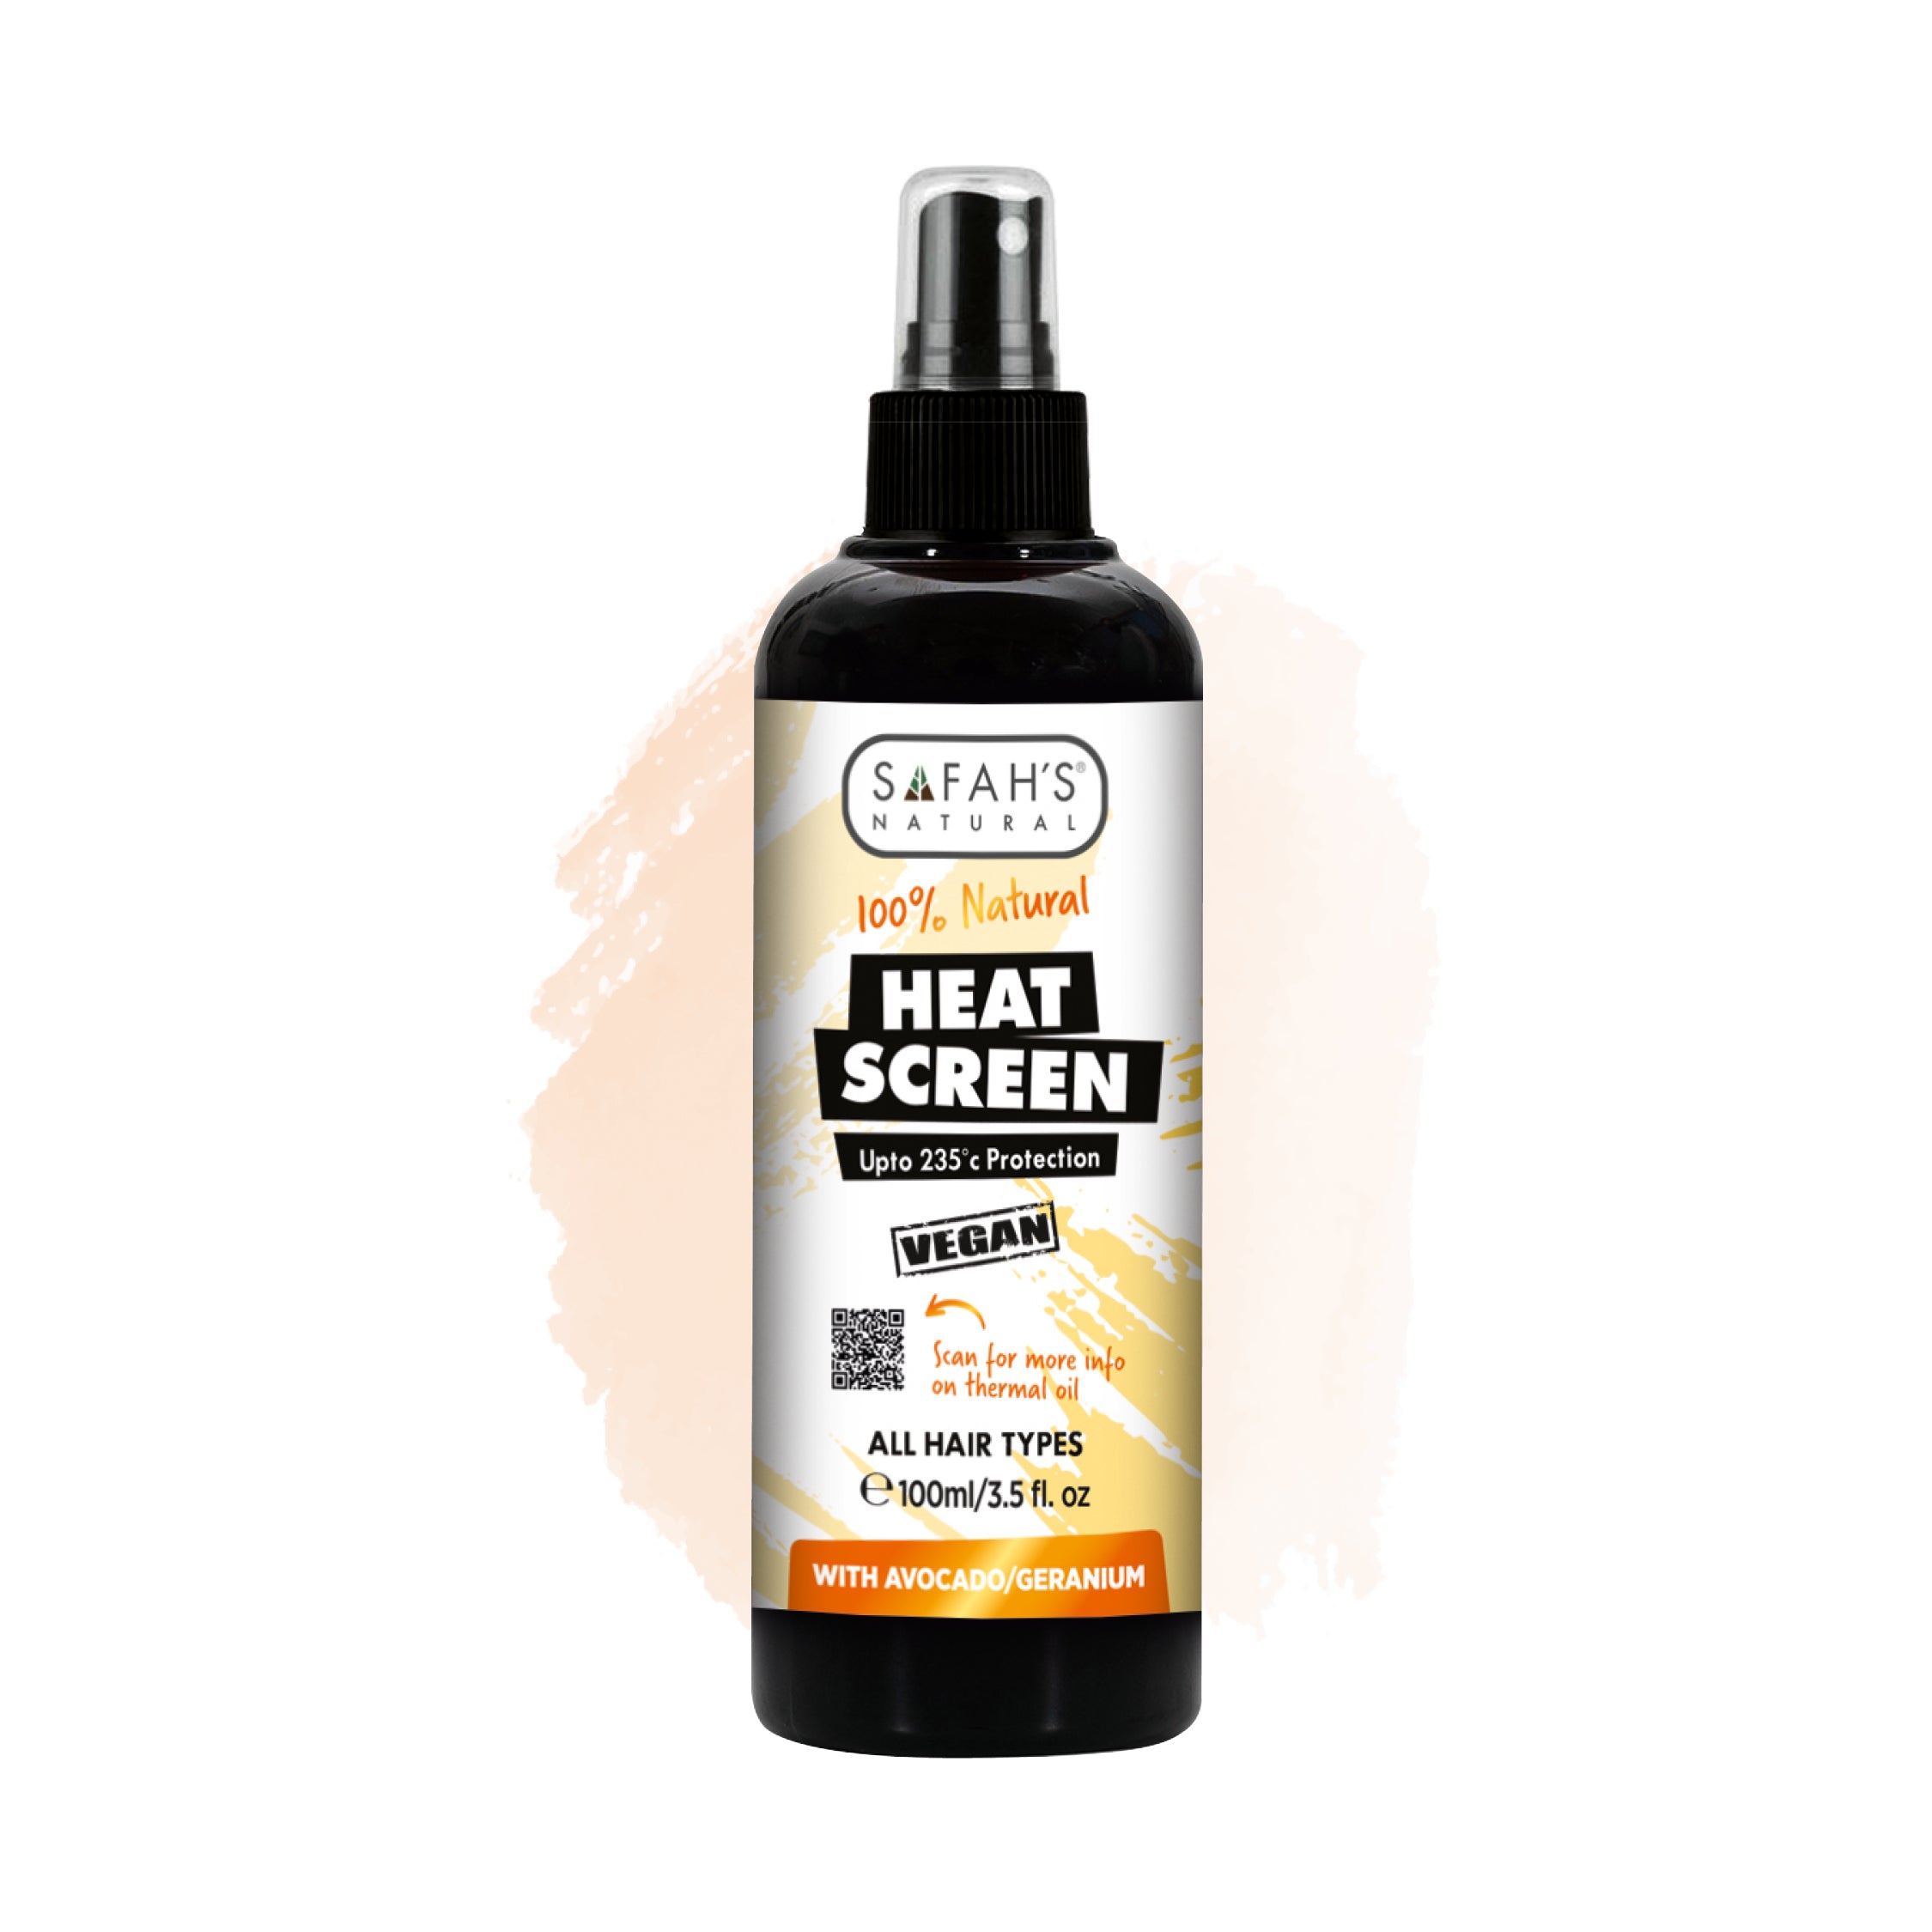 Heat Screen Heat Protector Spray - Avocado & Geranium Formula for All Hair Types